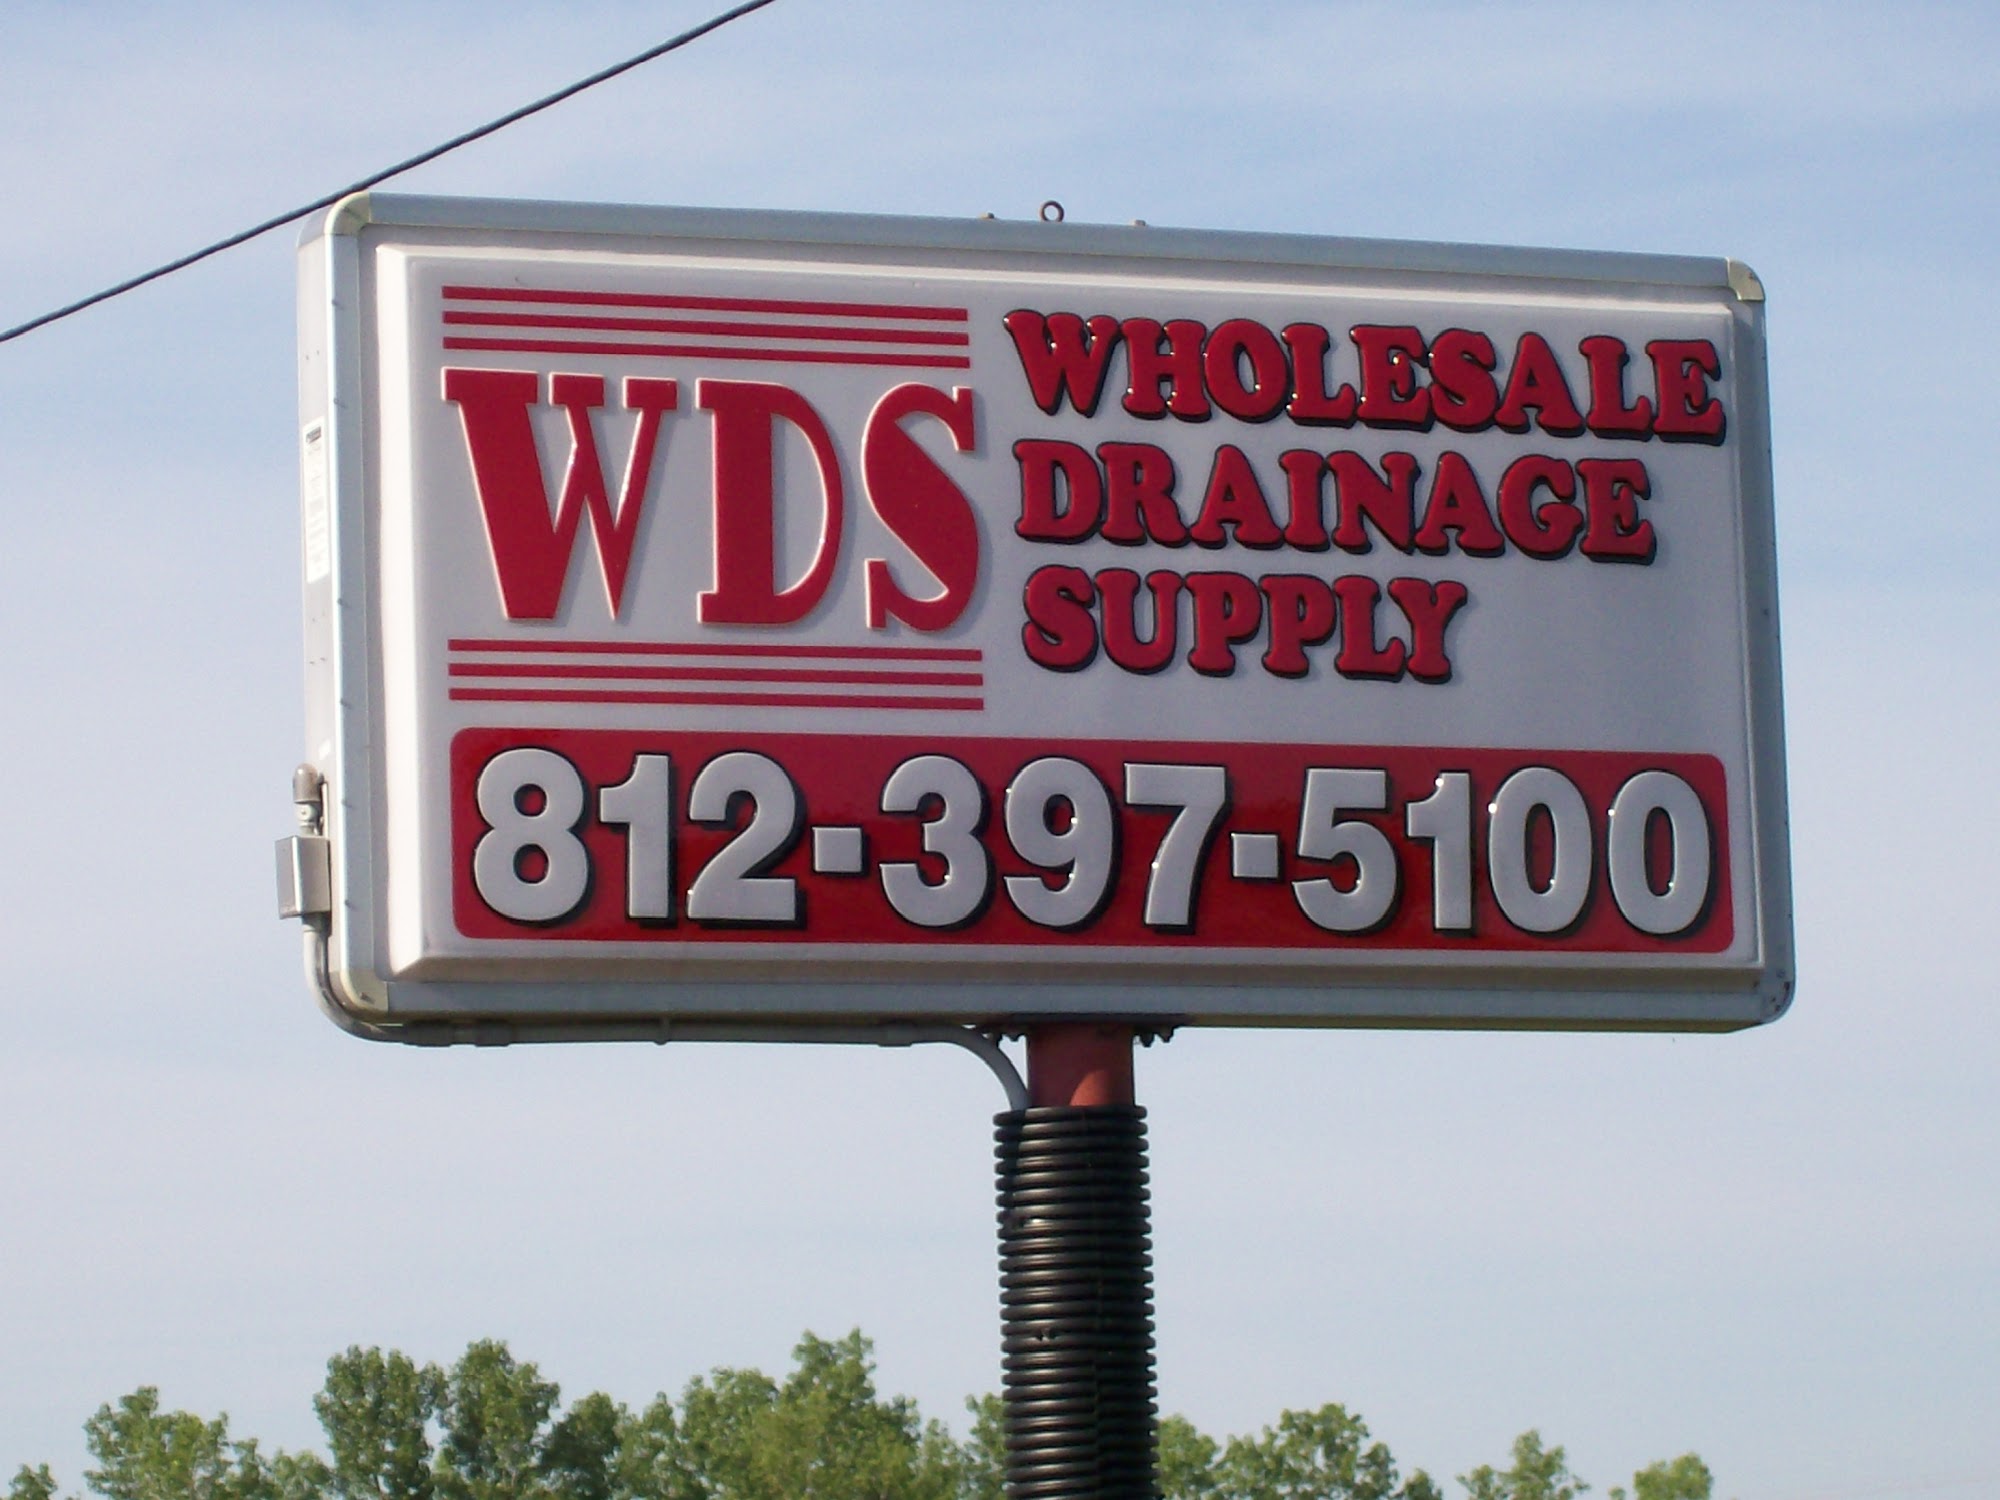 Wholesale Drainage Supply 8300 N Co Rd 25 E, Shelburn Indiana 47879